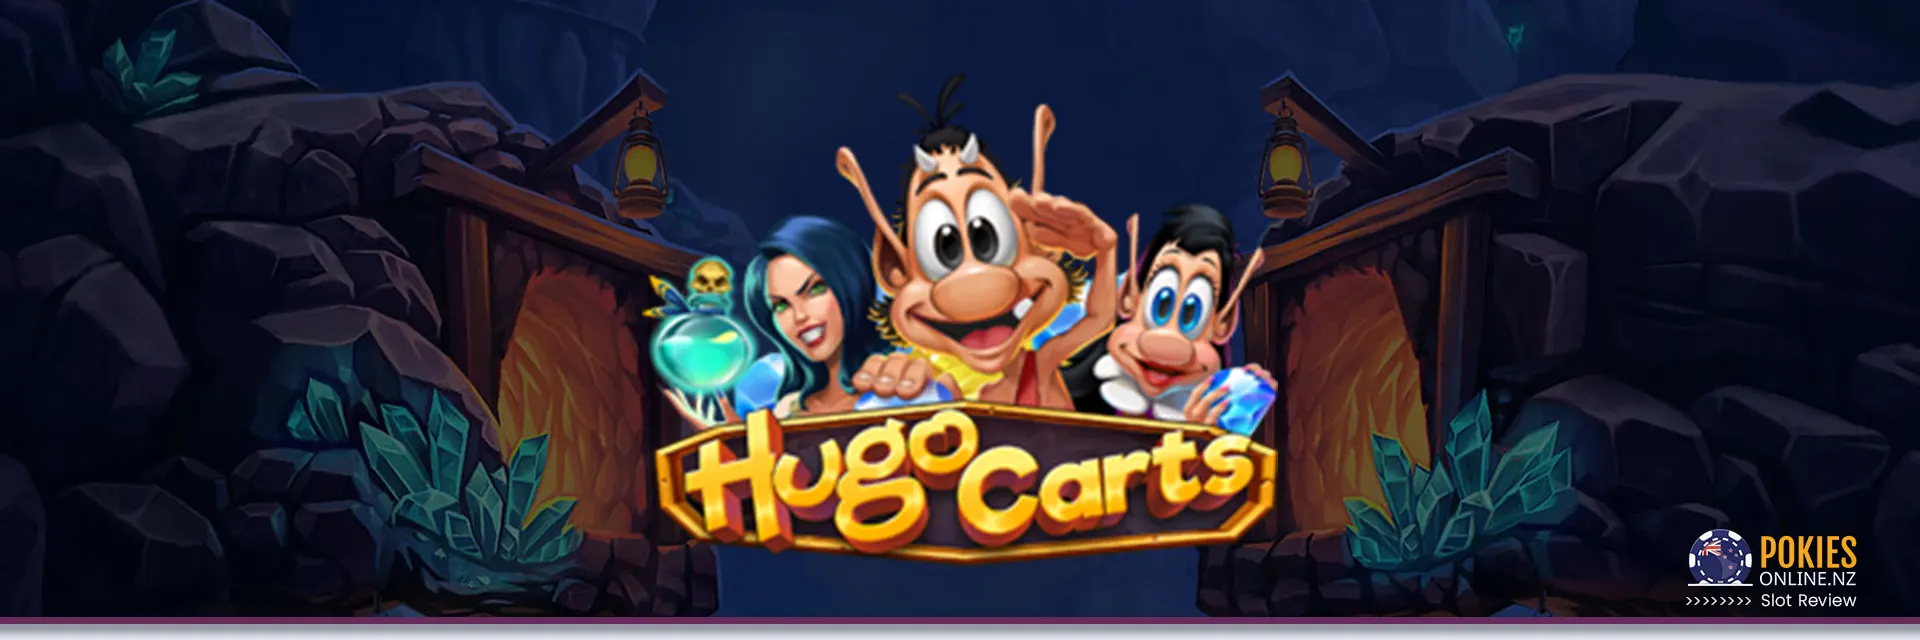 Hugo Carts slot banner